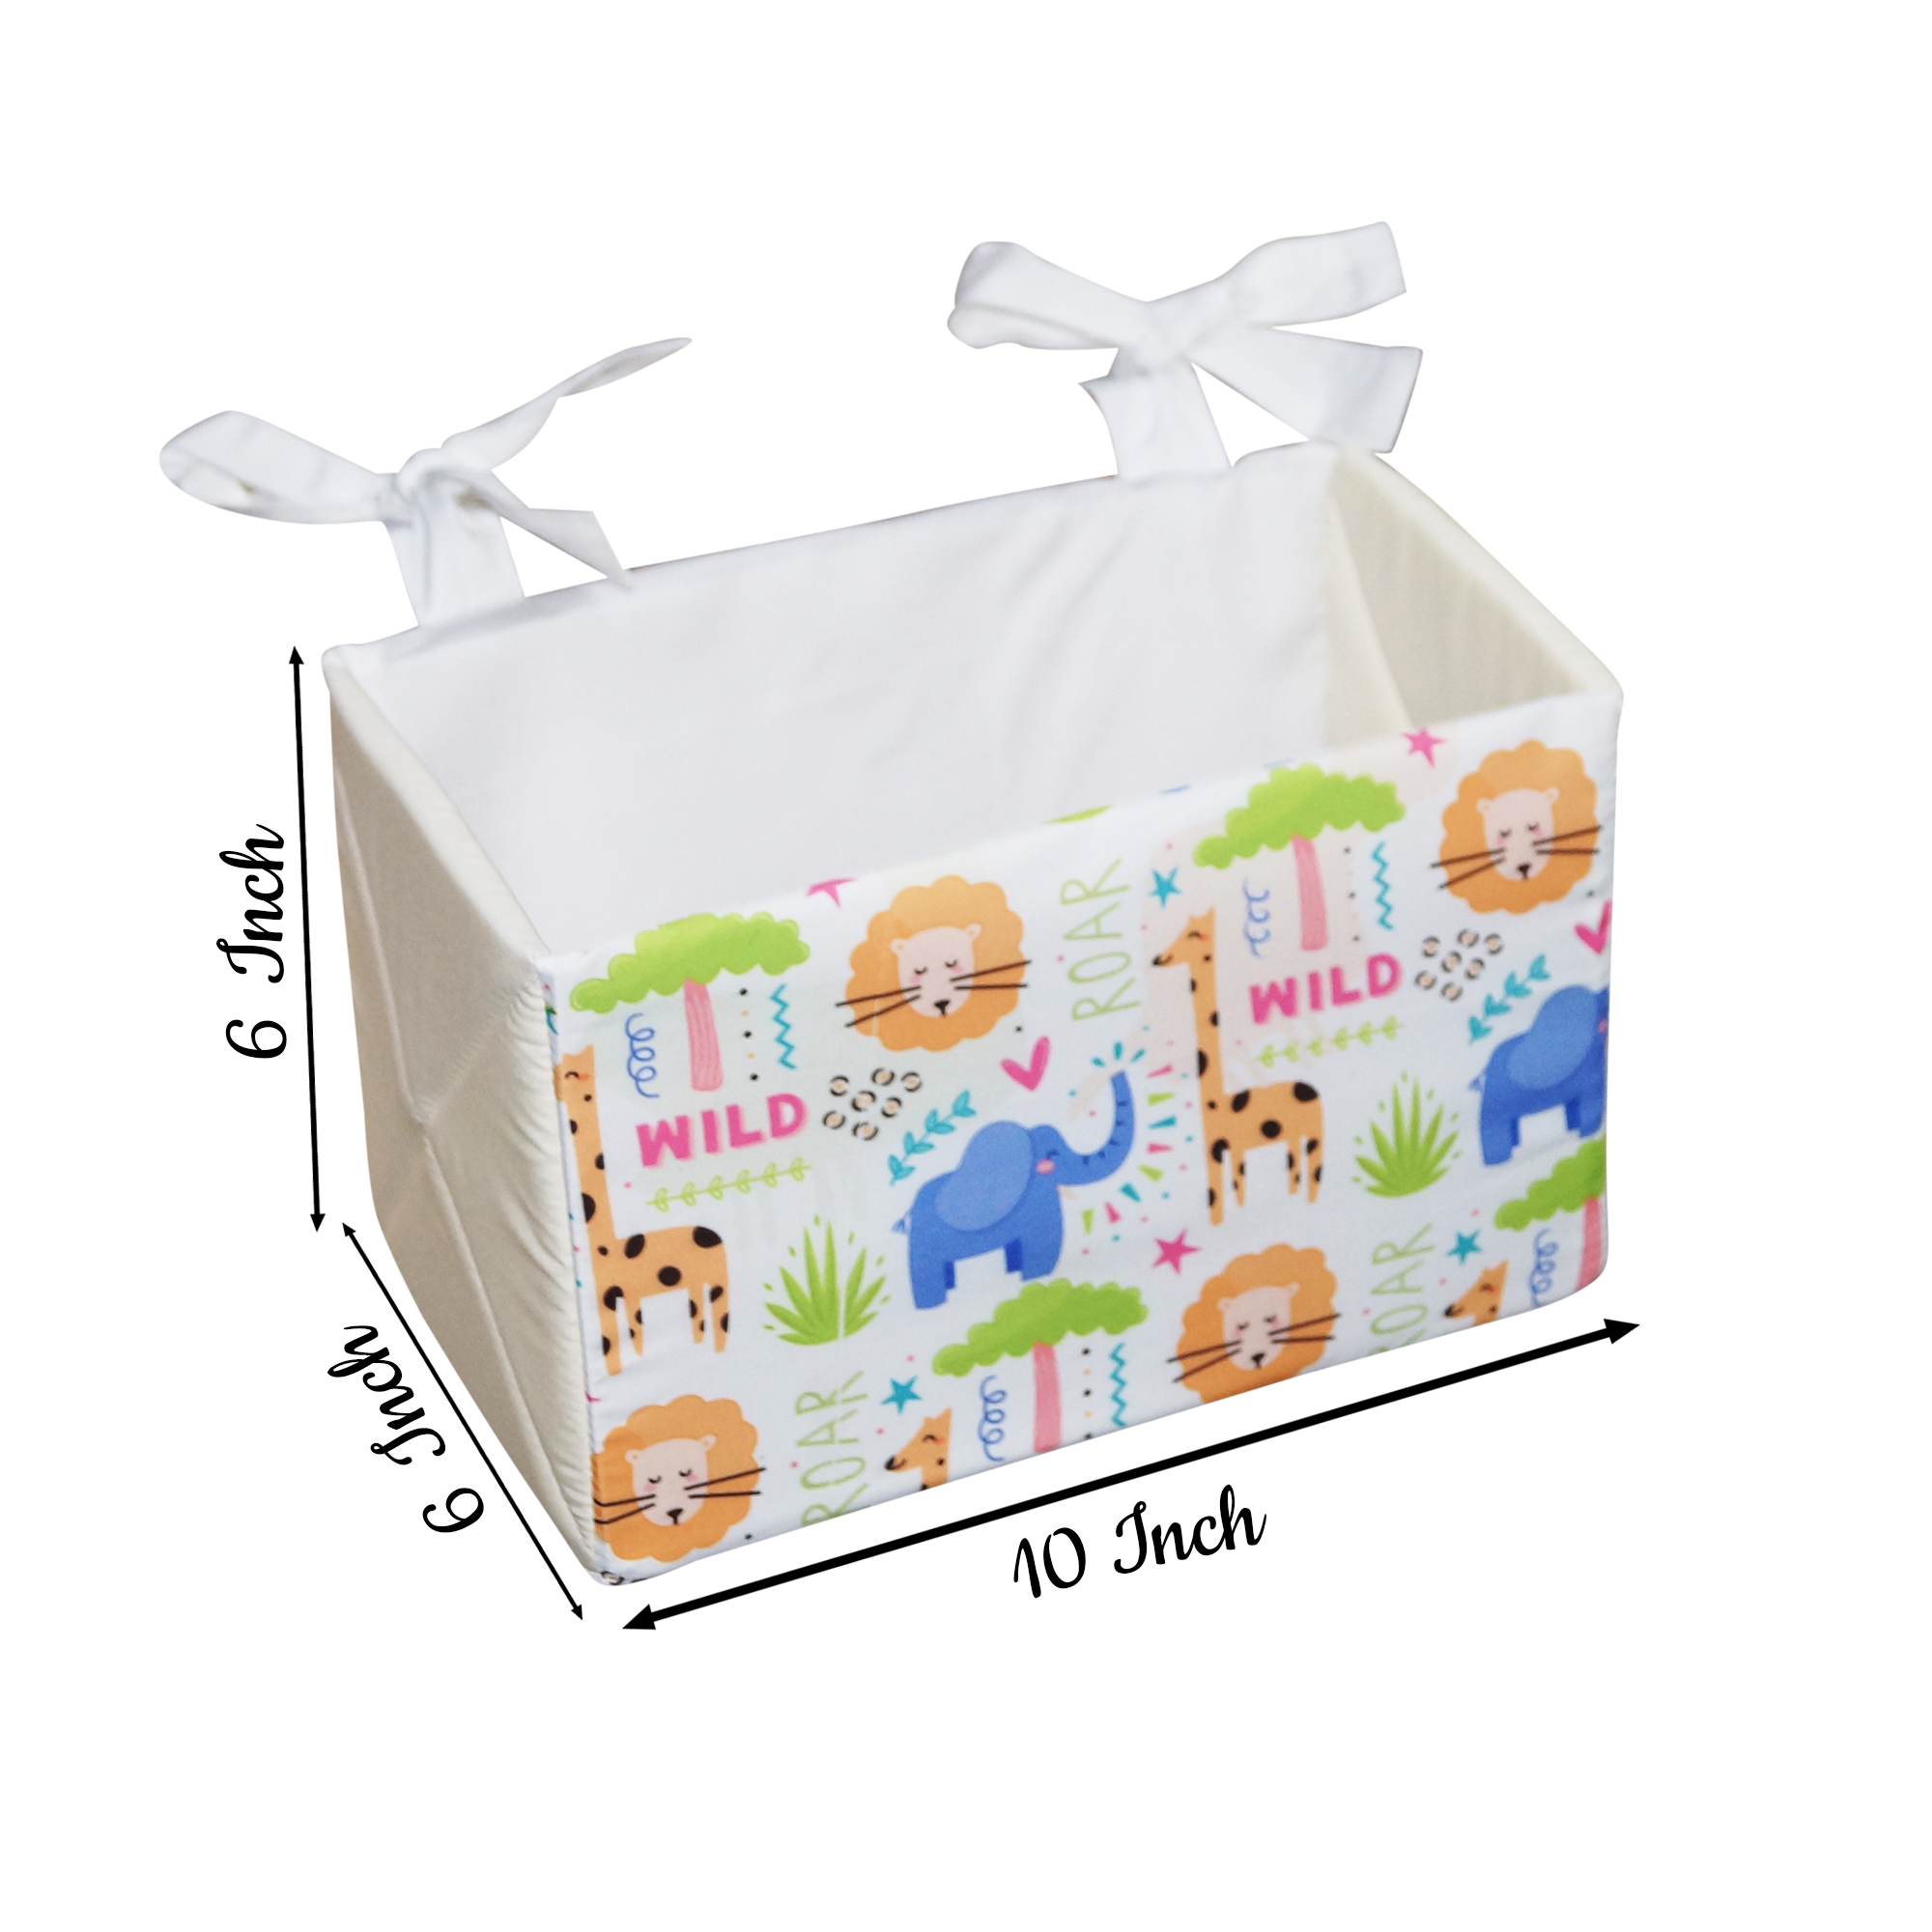 Baby accessory storage box